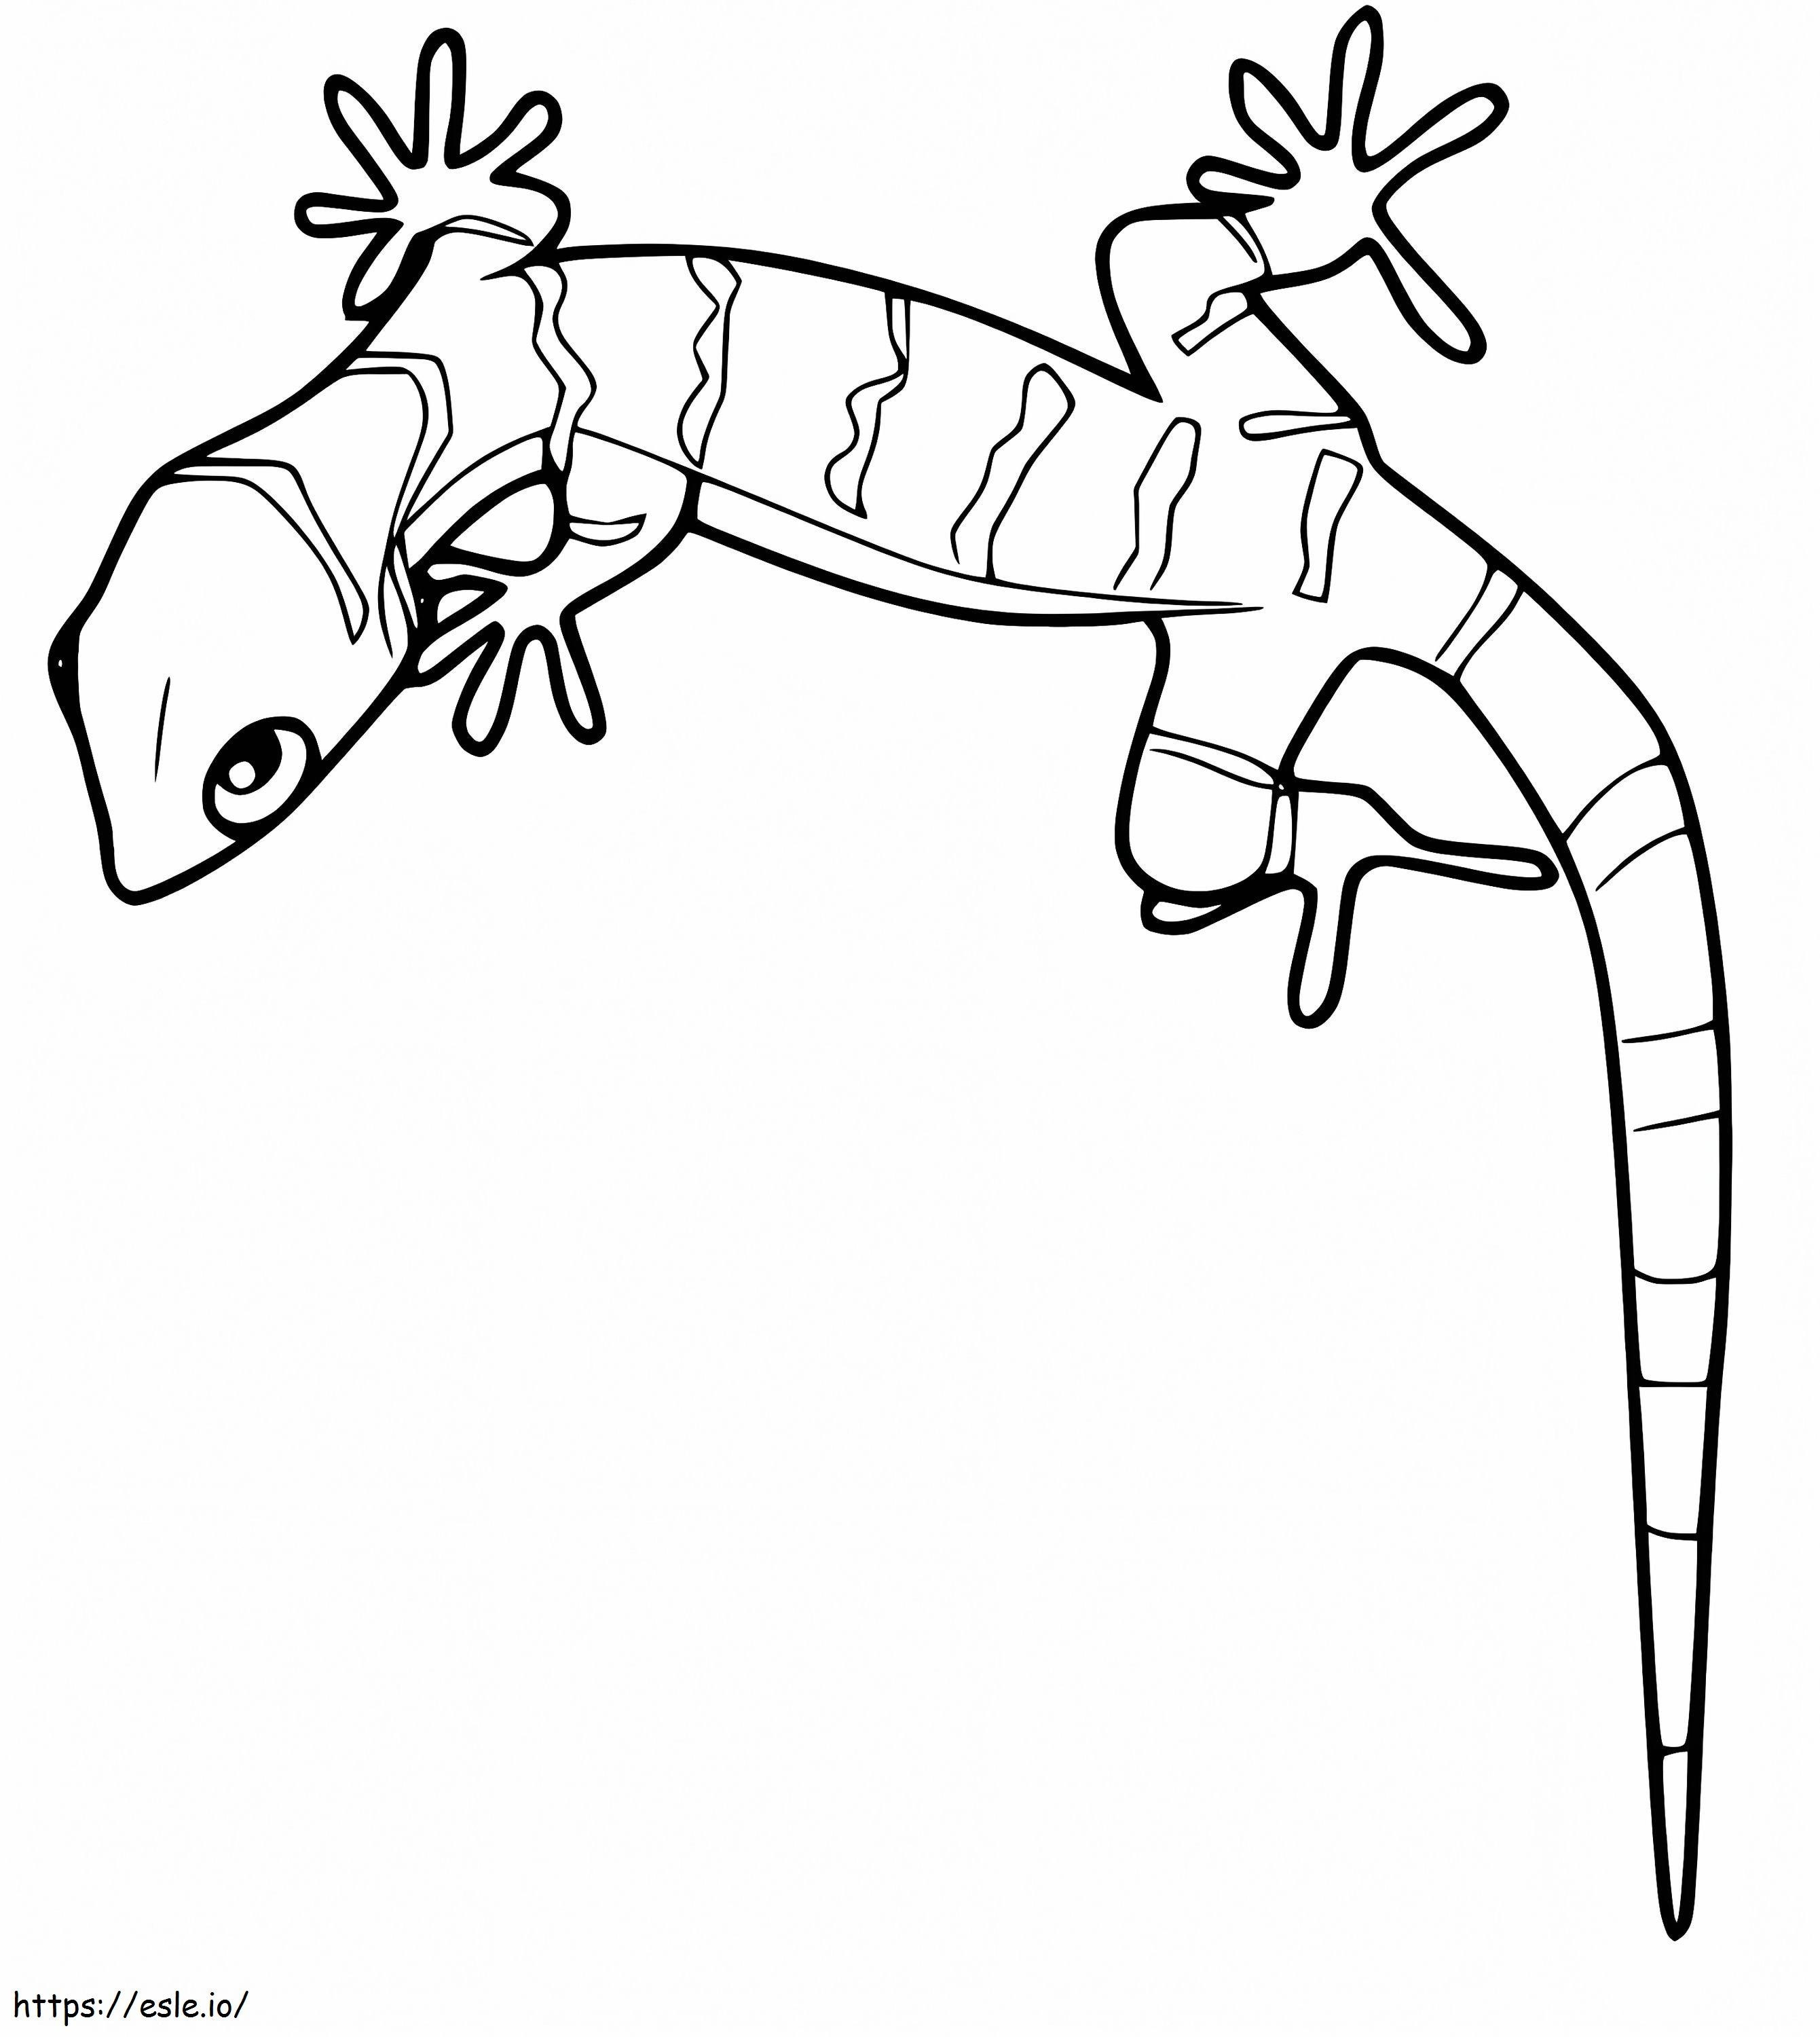 Gebänderter Gecko ausmalbilder